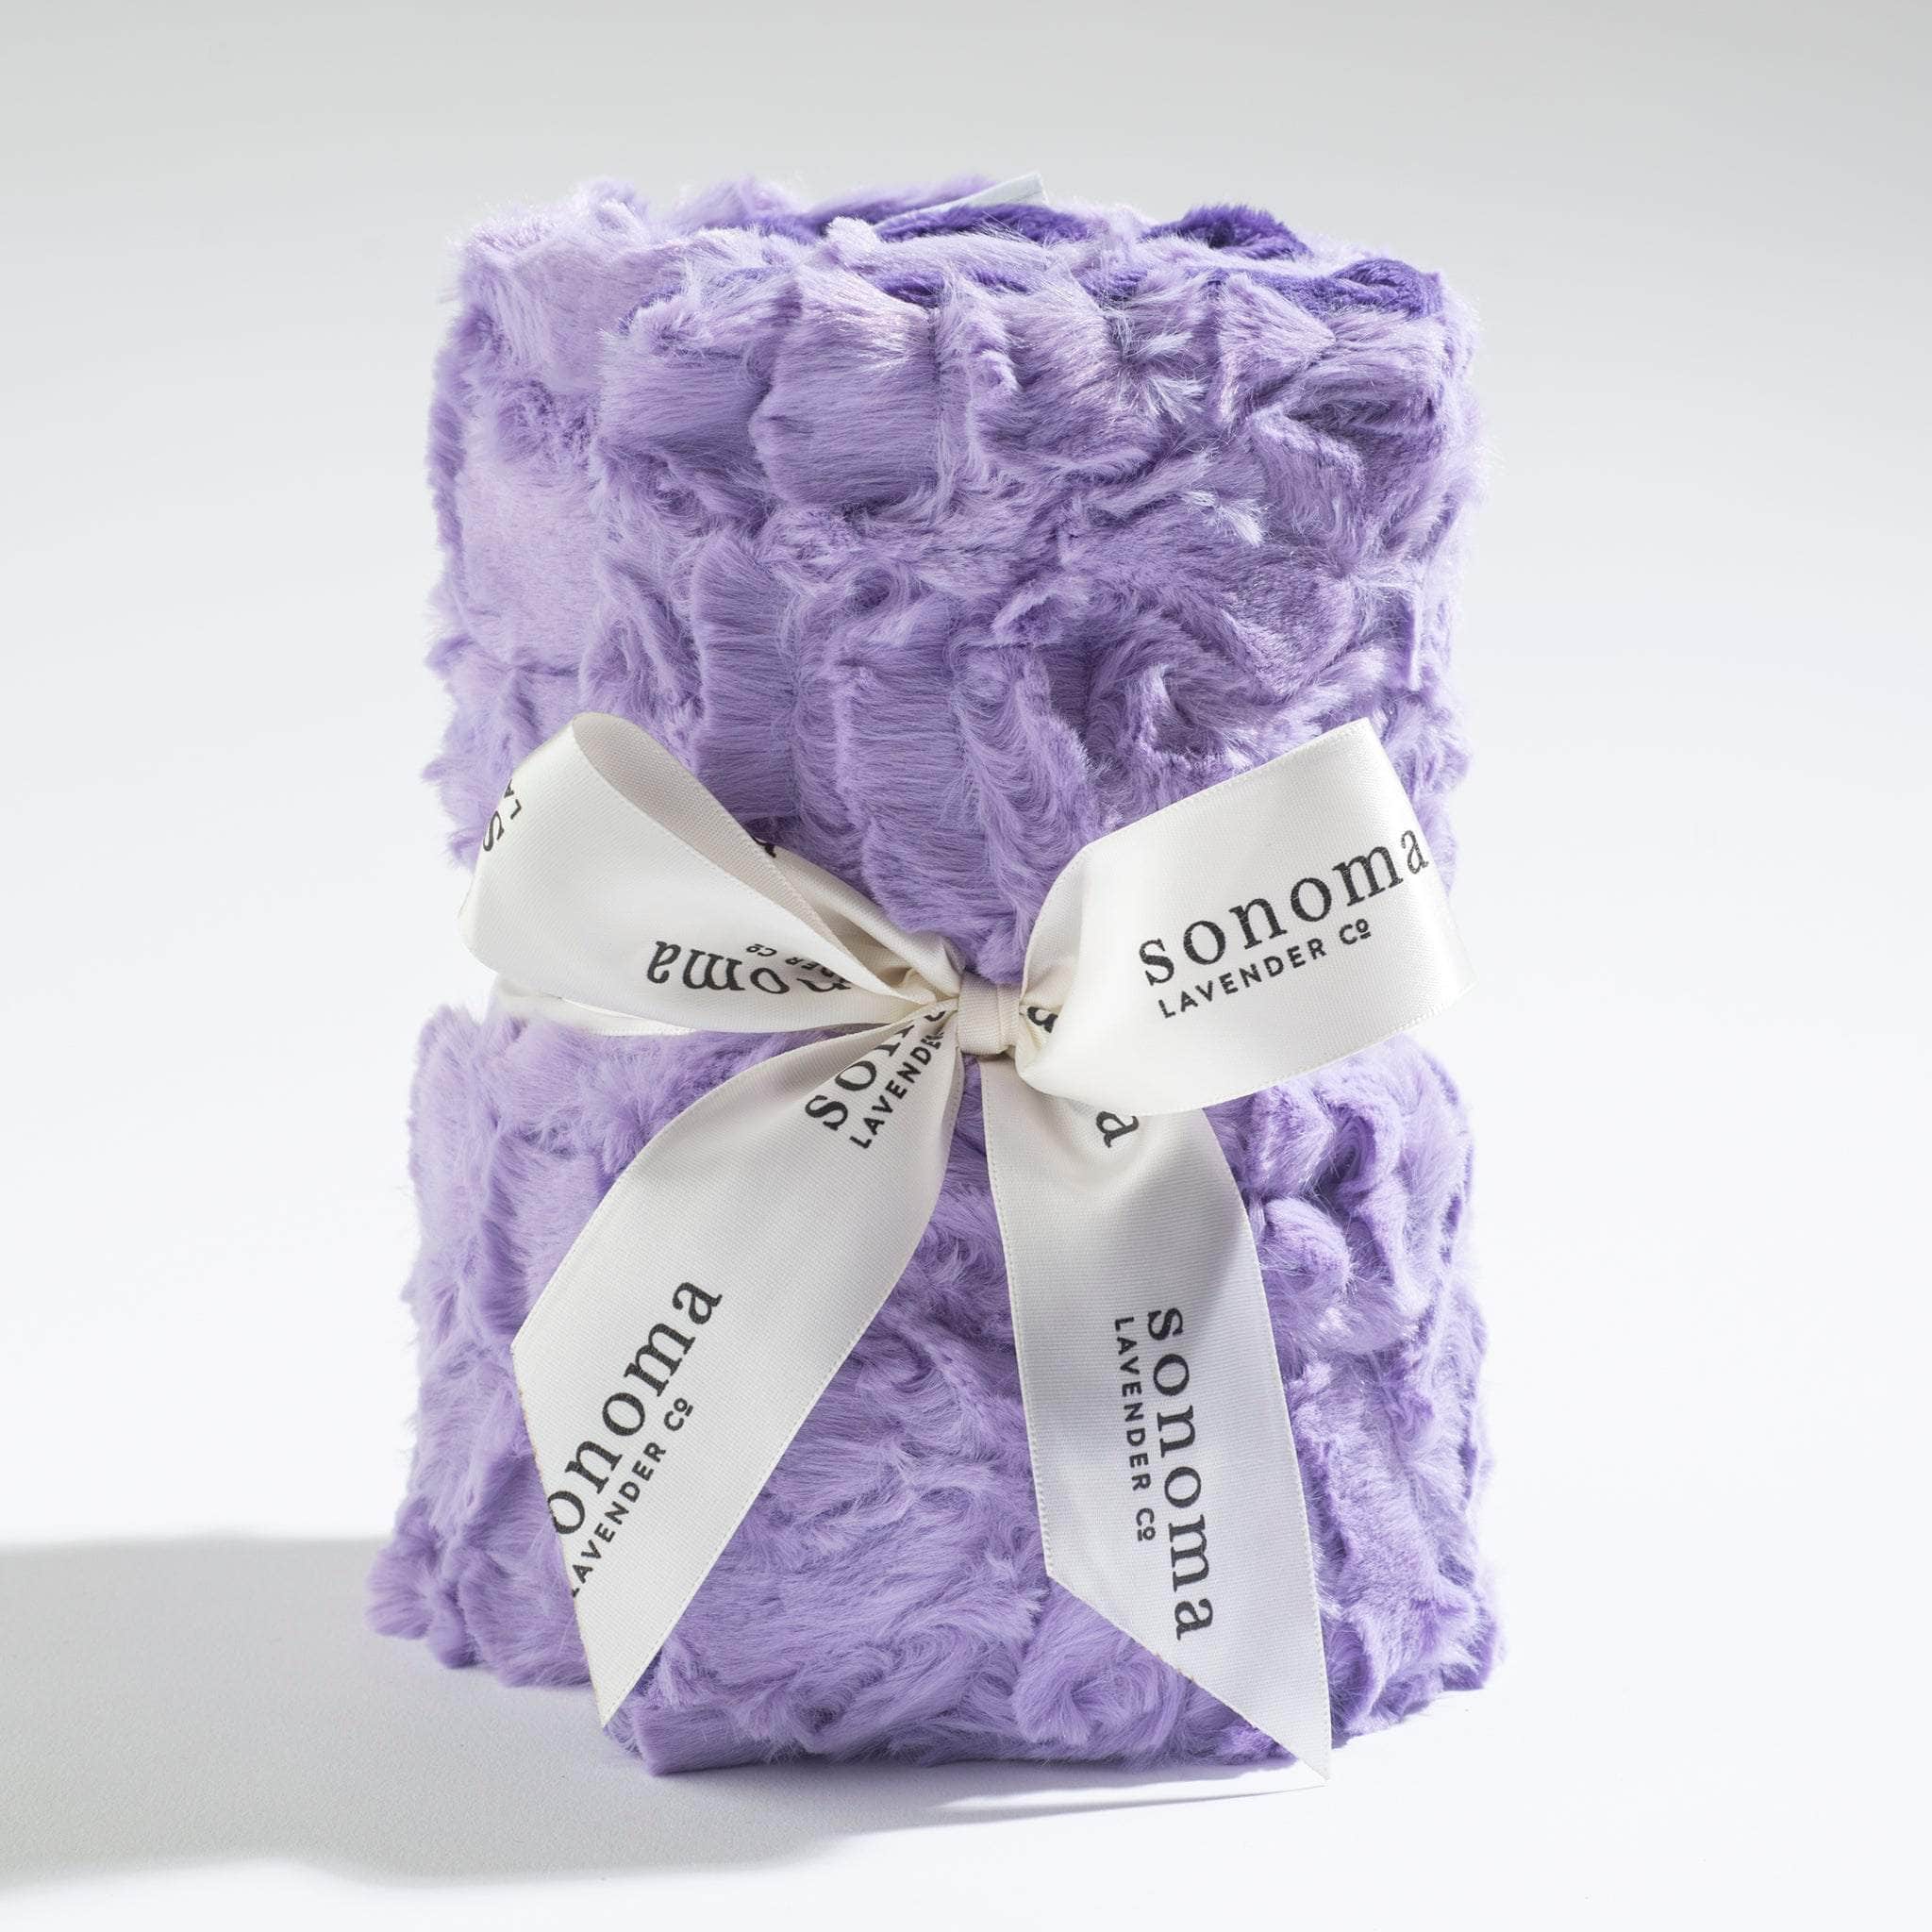 Lavender Spa Heat Wrap in Sculpted Bellflower Rose Fabric